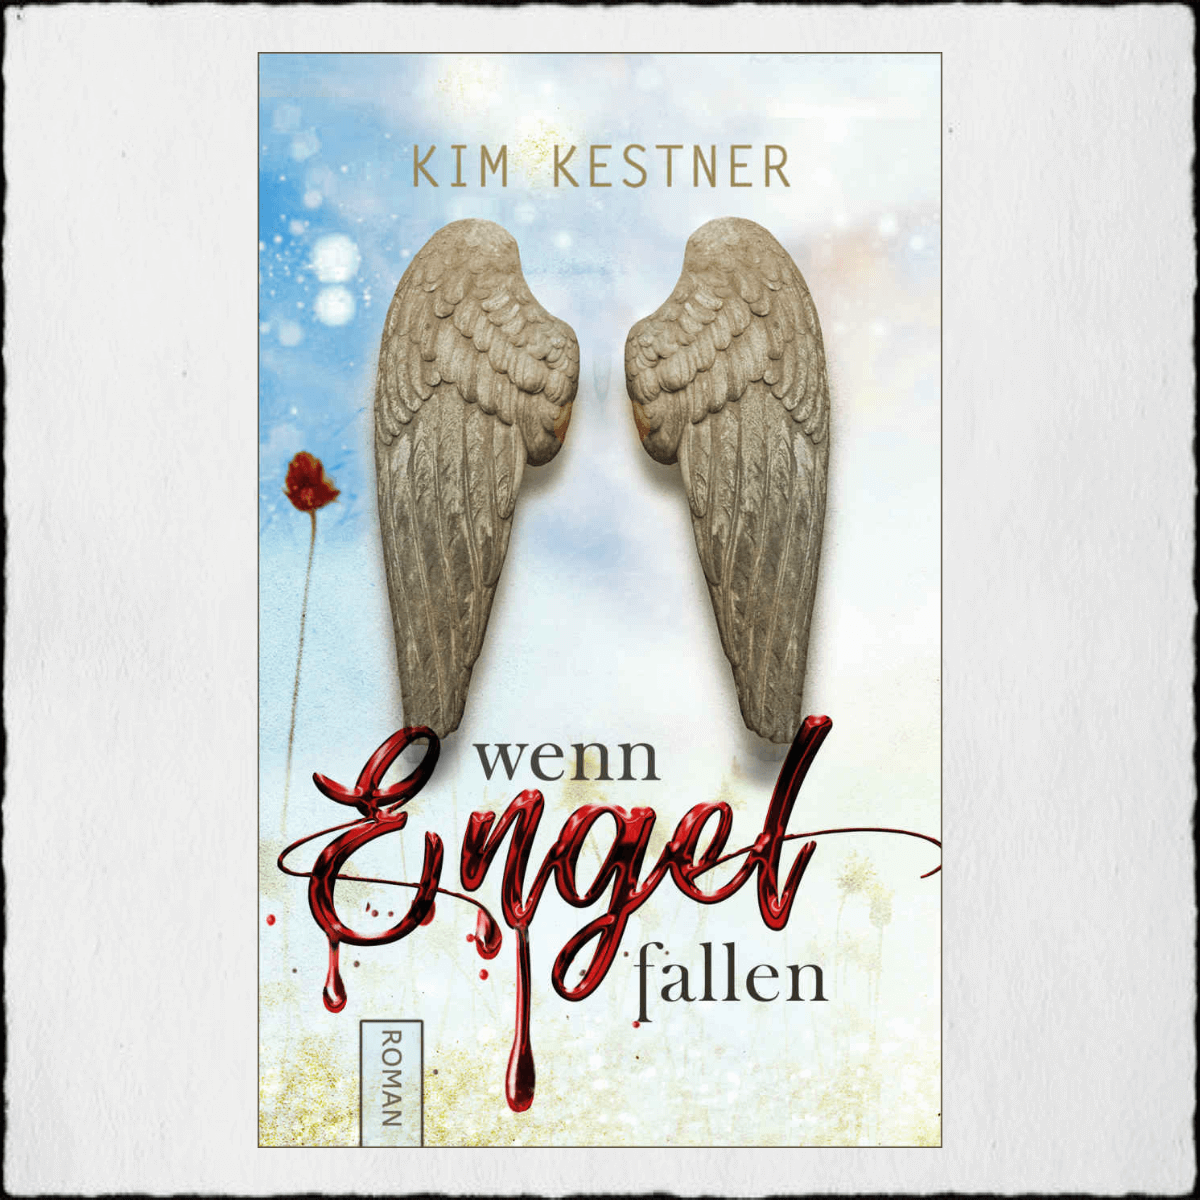 Kim Kestner "Wenn Engel fallen" © 2019 Kim Kestner in Selbspublikation